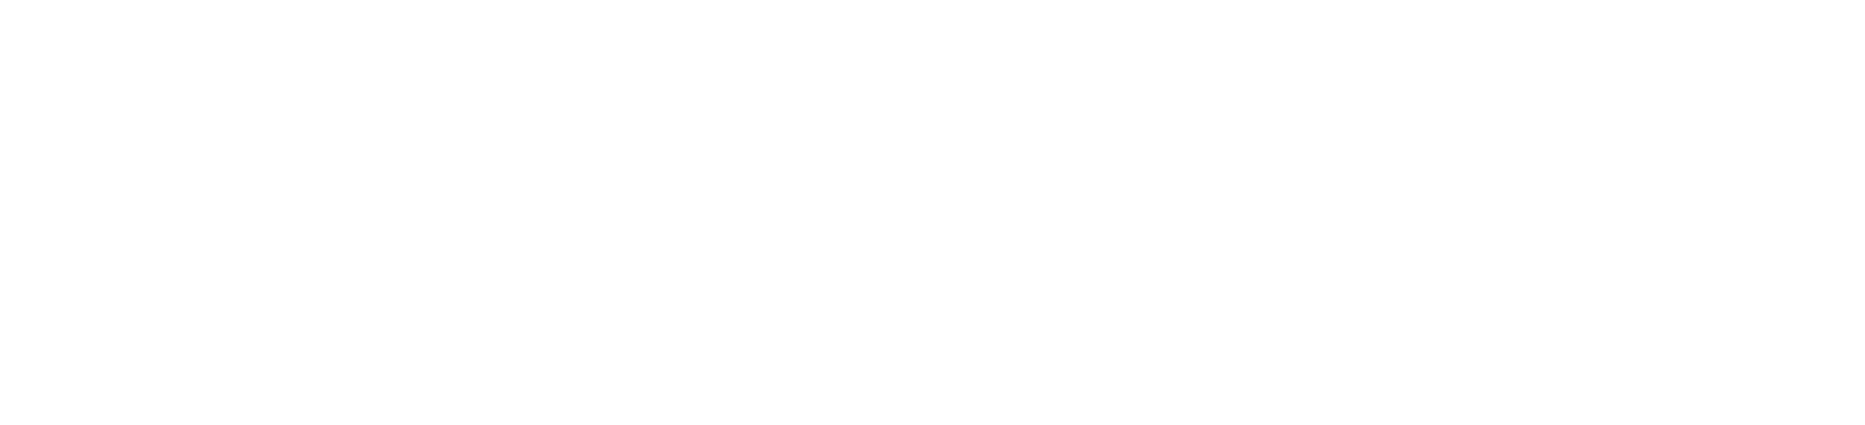 Best Western Premier - Best Western Premier Collection Logo Clipart (1865x425), Png Download